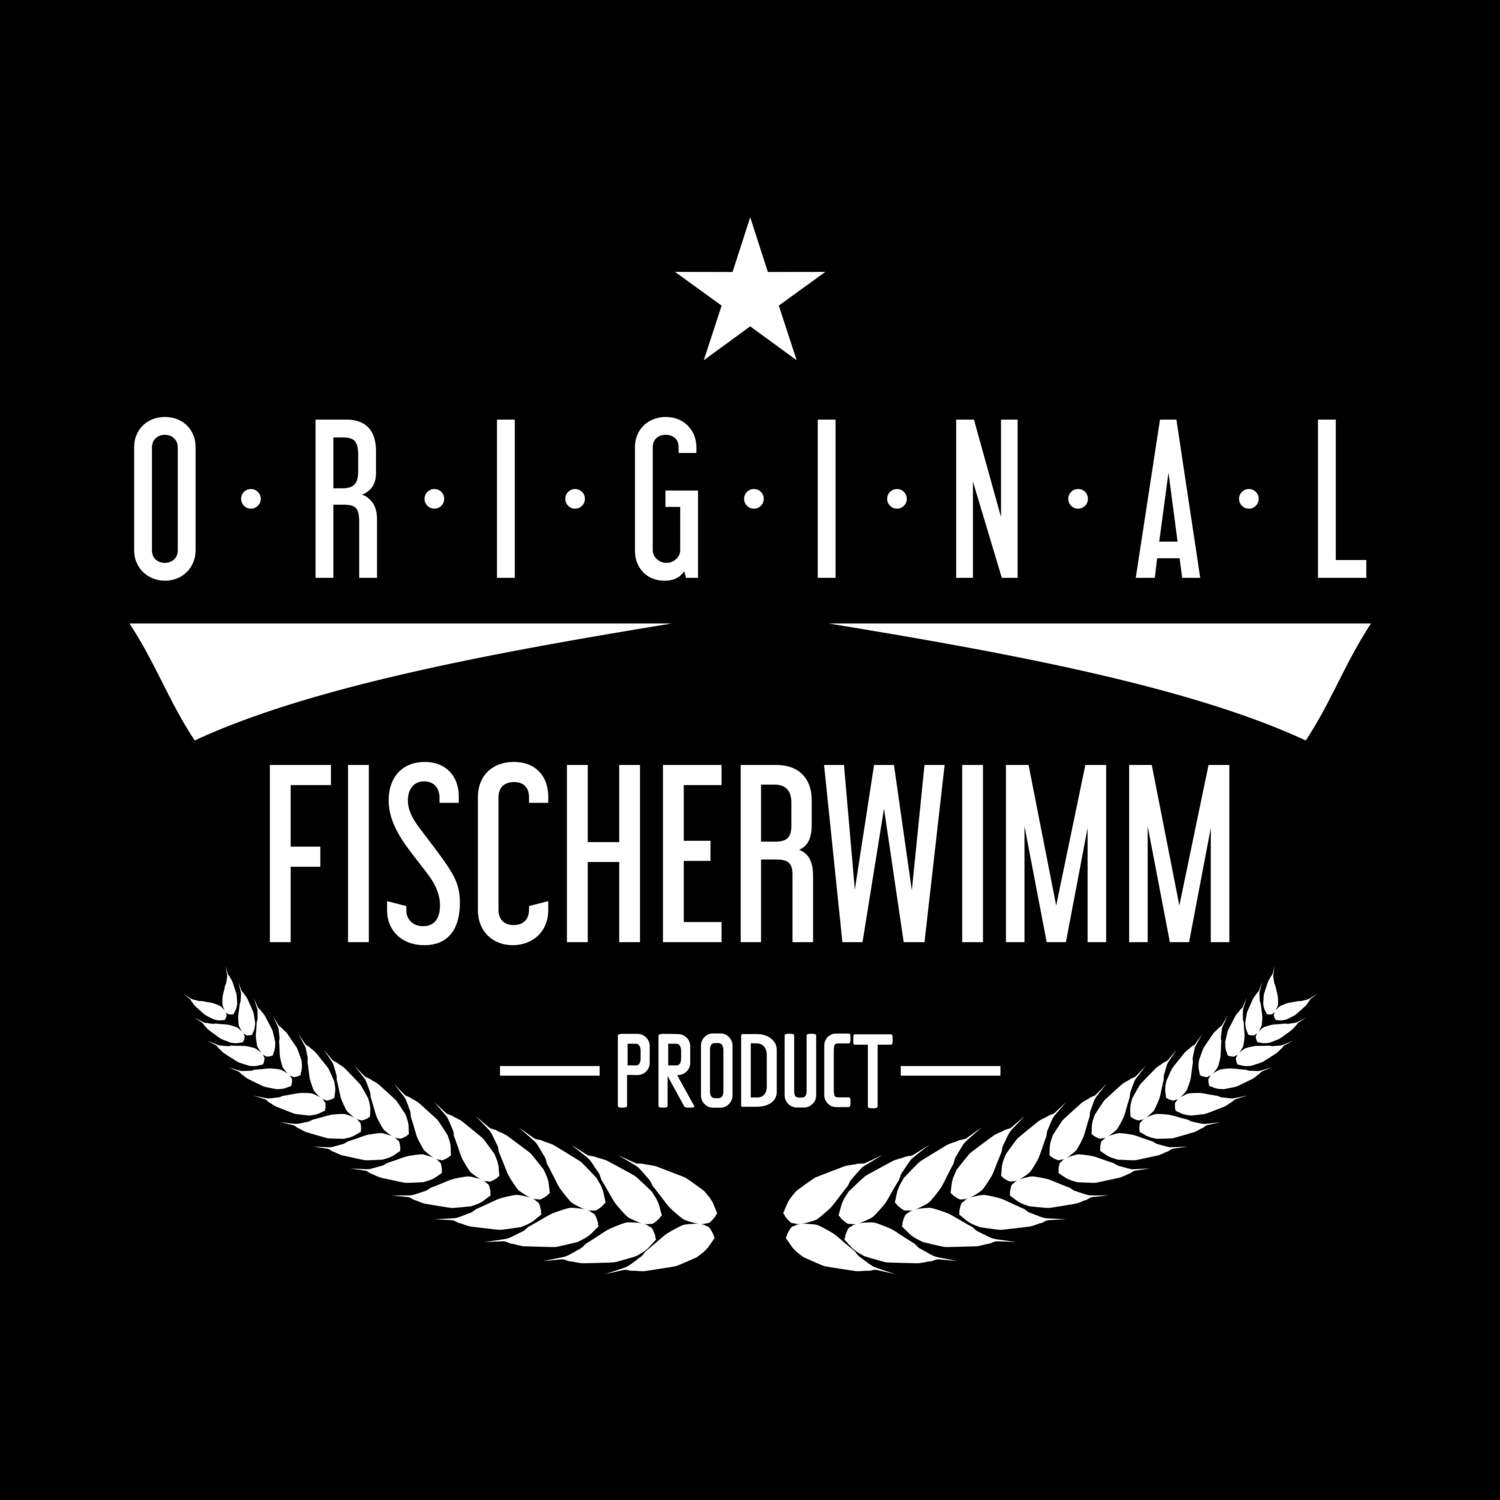 Fischerwimm T-Shirt »Original Product«